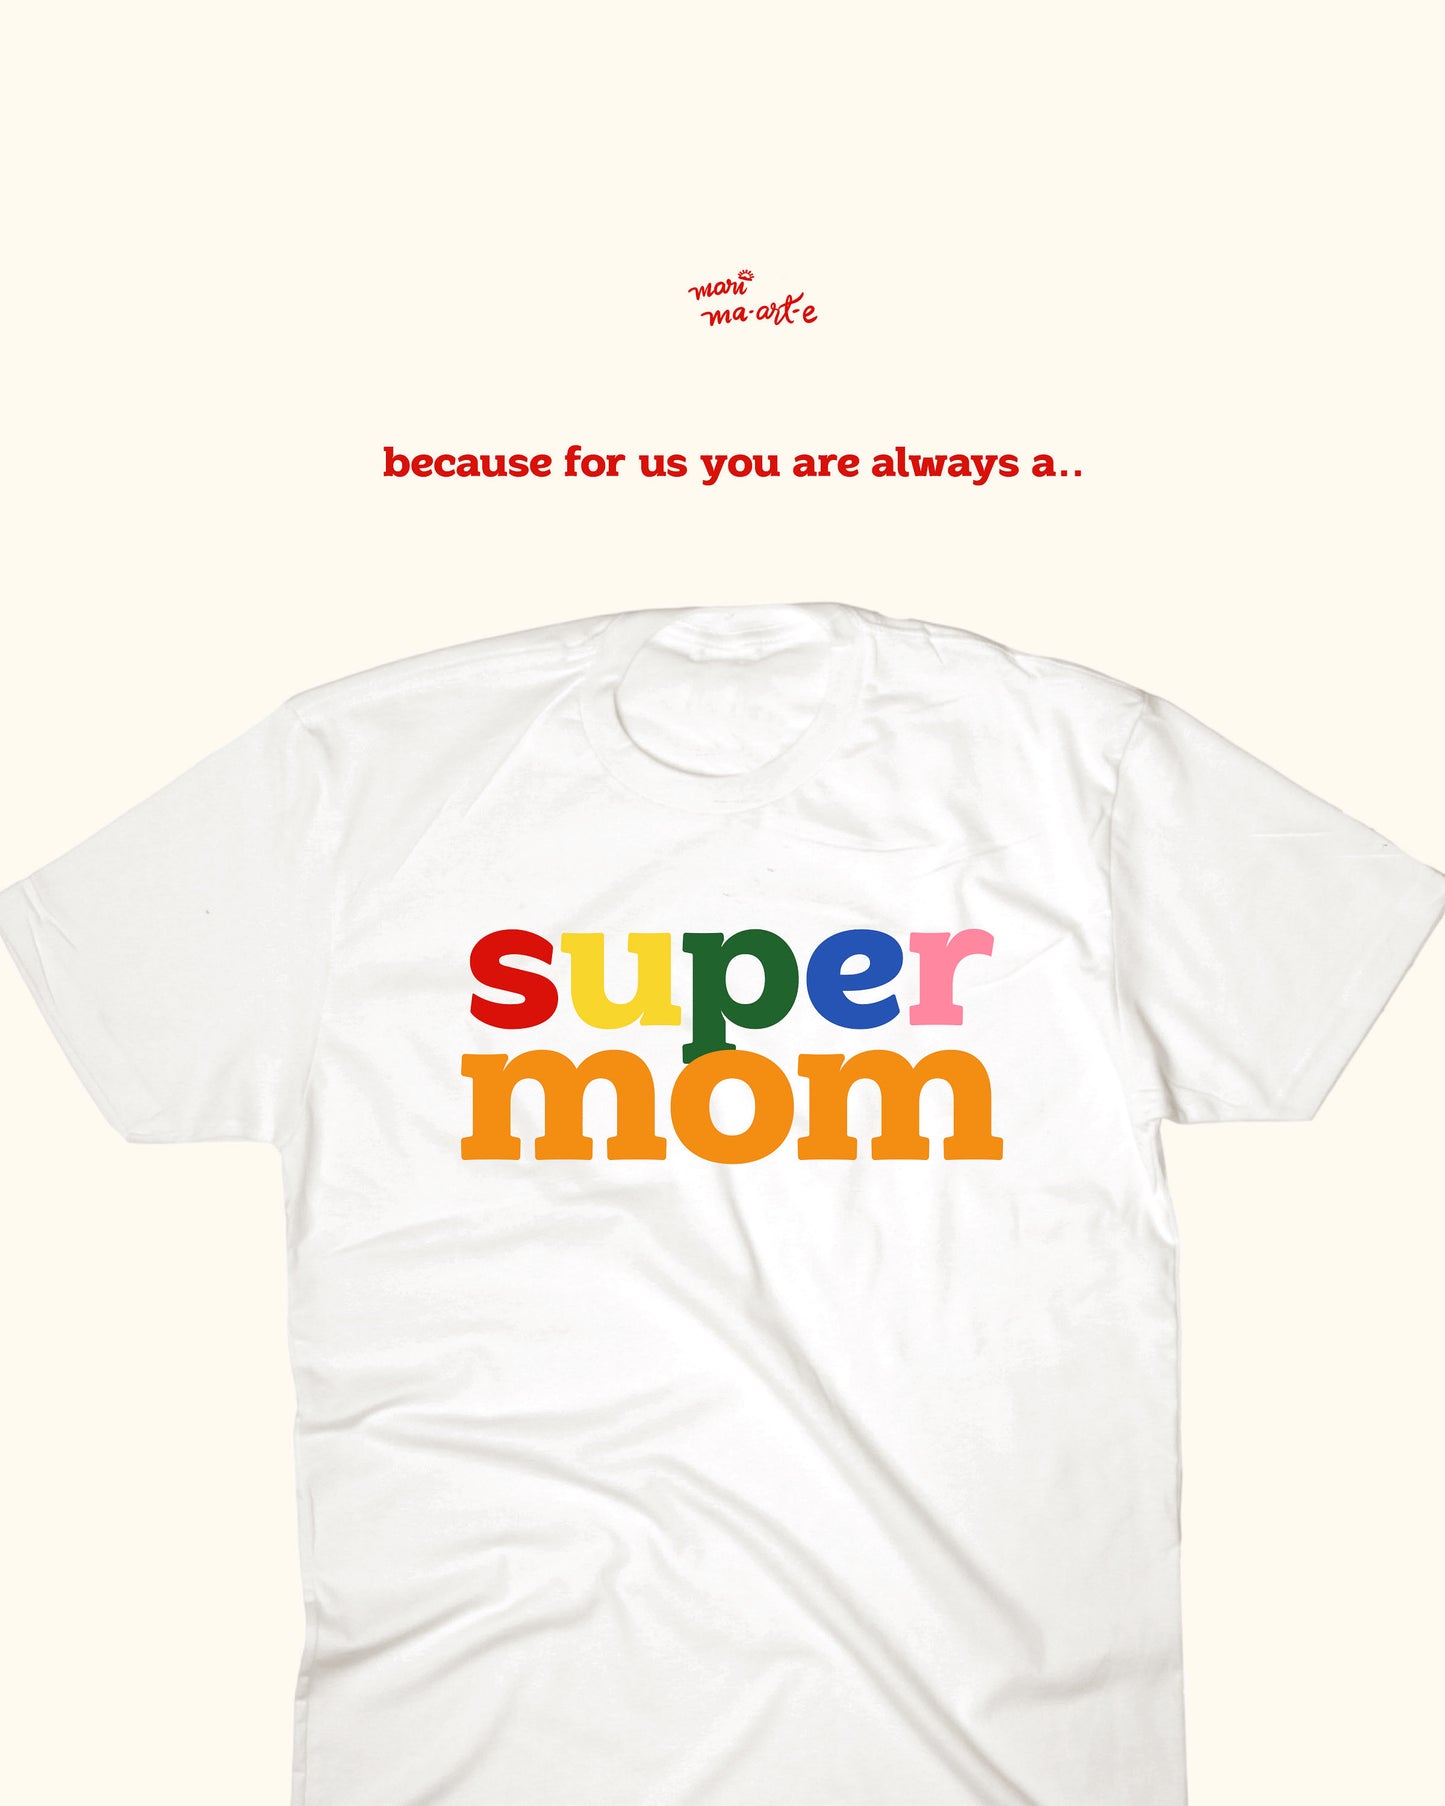 SUPER MOM vinyl shirt